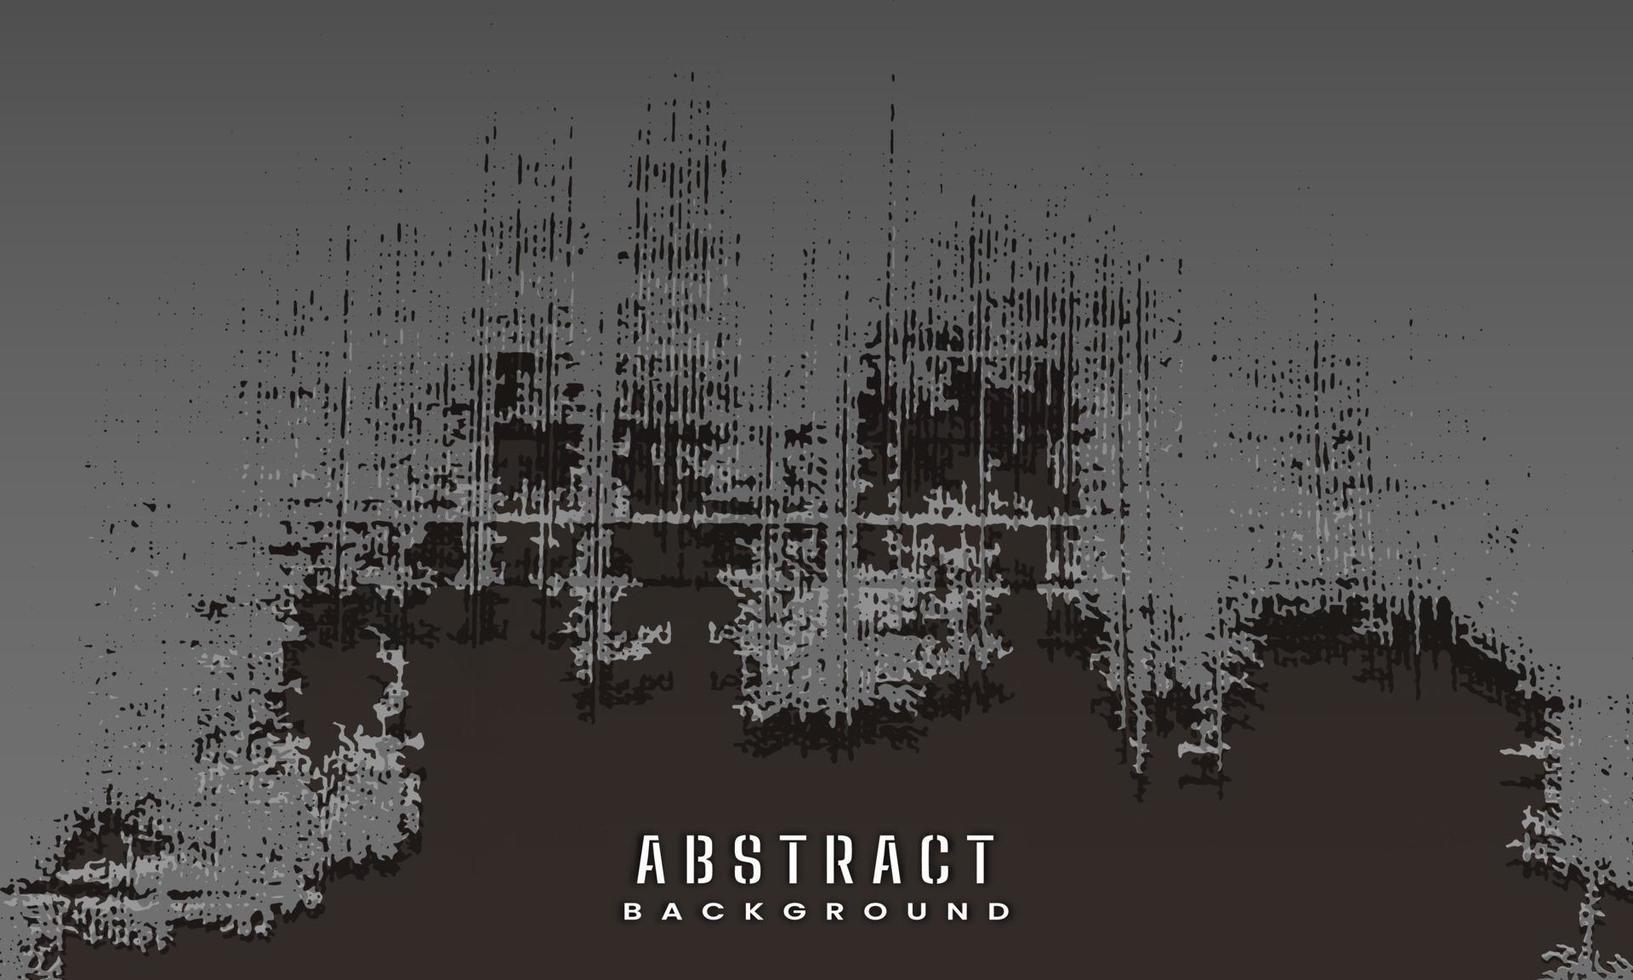 abstracte textuur grunge achtergrond vector